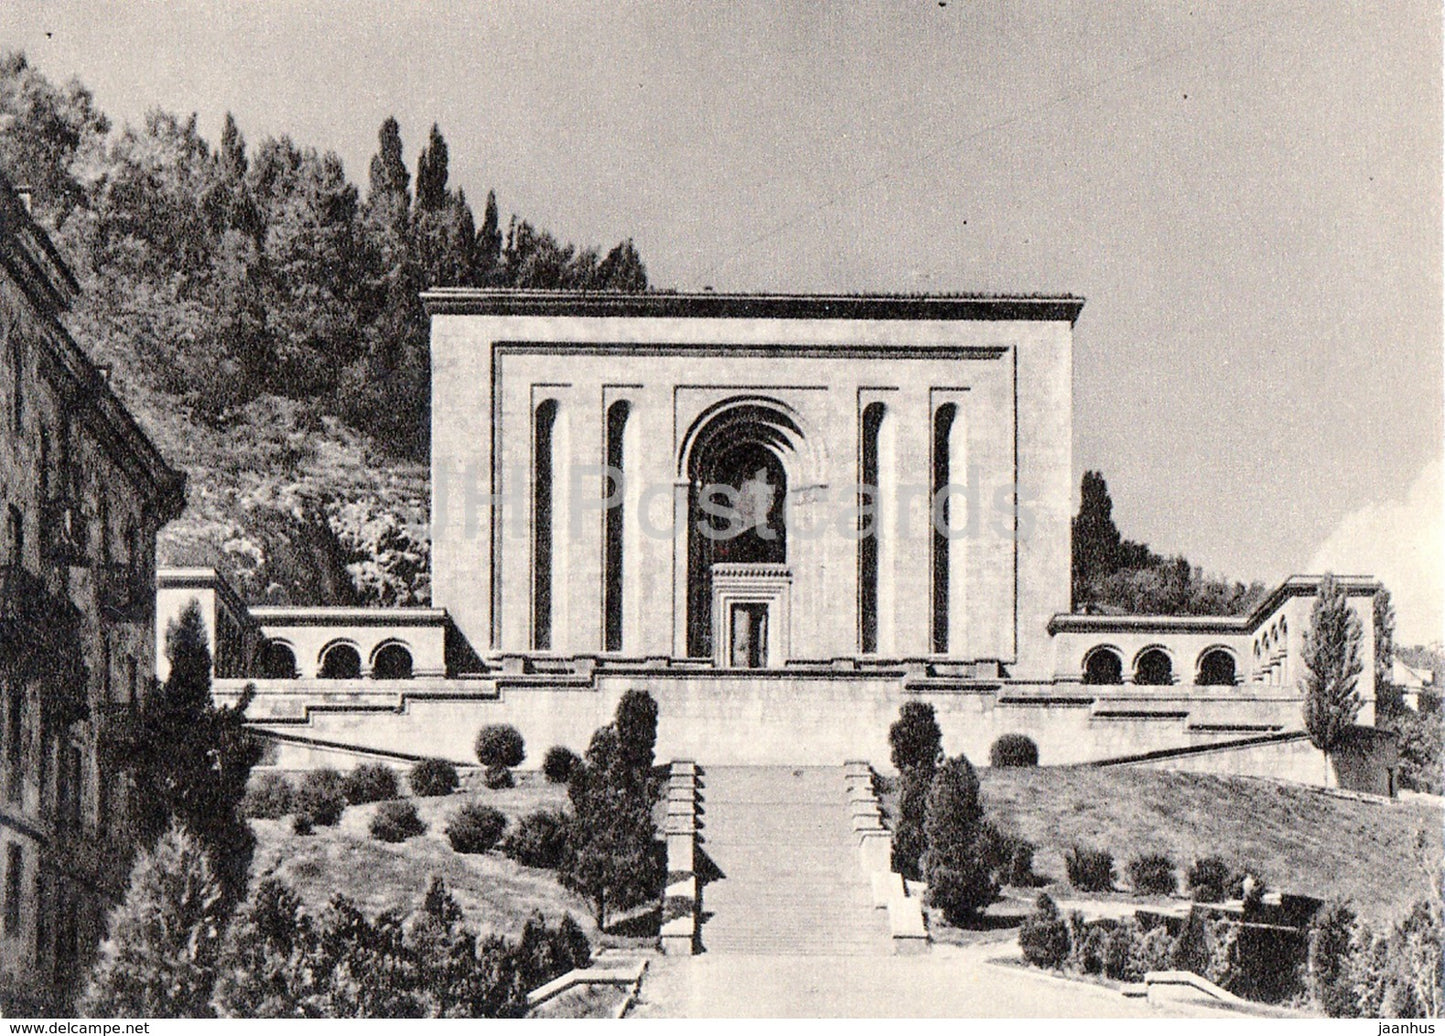 Yerevan - Matenadaran - Institute of Ancient Manuscripts - Architecture in Armenia - 1966 - Armenia USSR - unused - JH Postcards